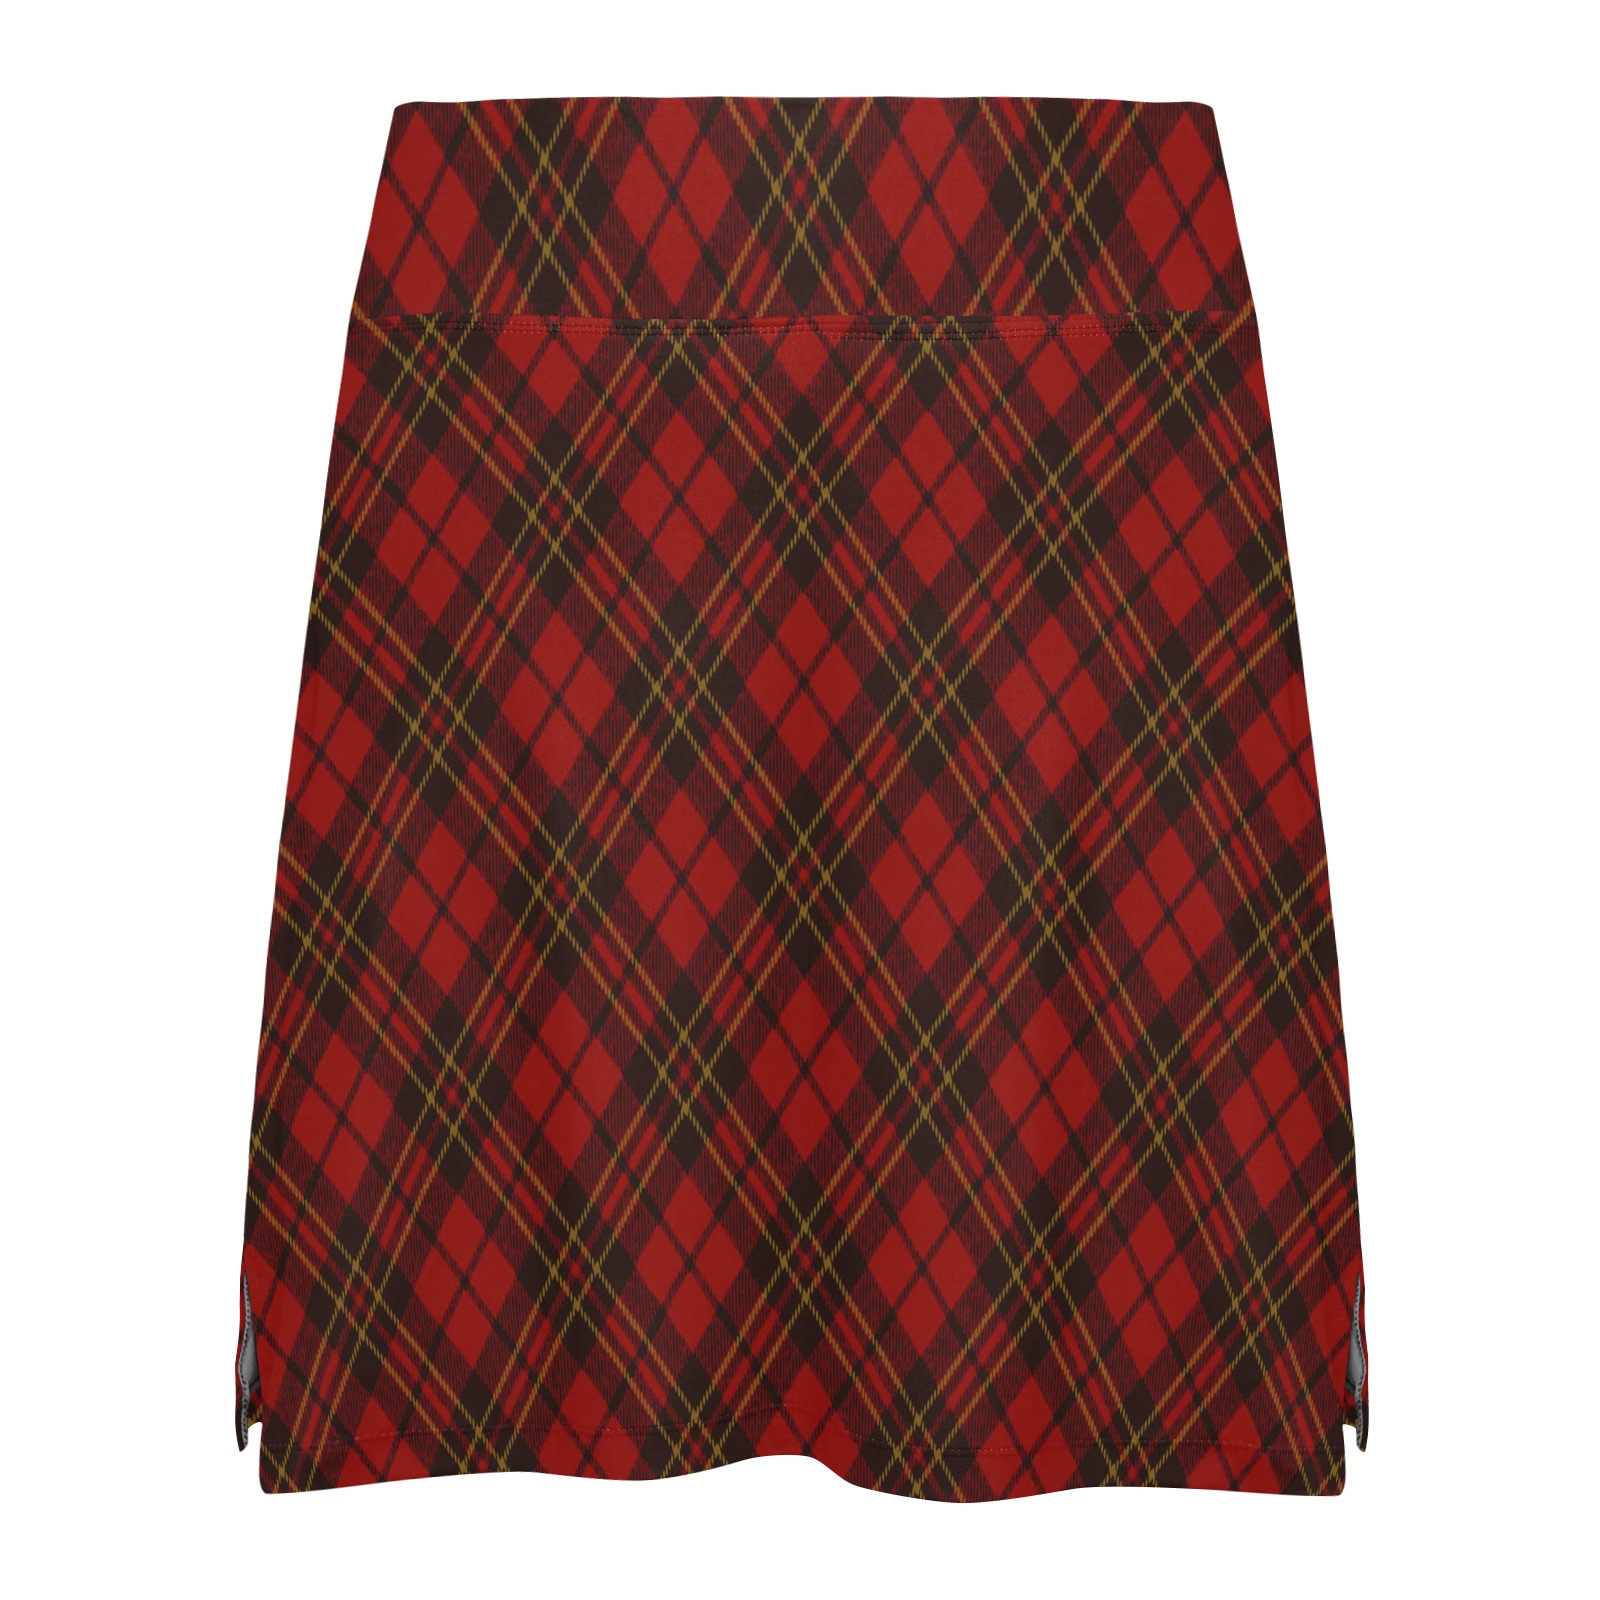 Red tartan plaid winter Christmas pattern holidays Women's Athletic Skirt (Model D64)